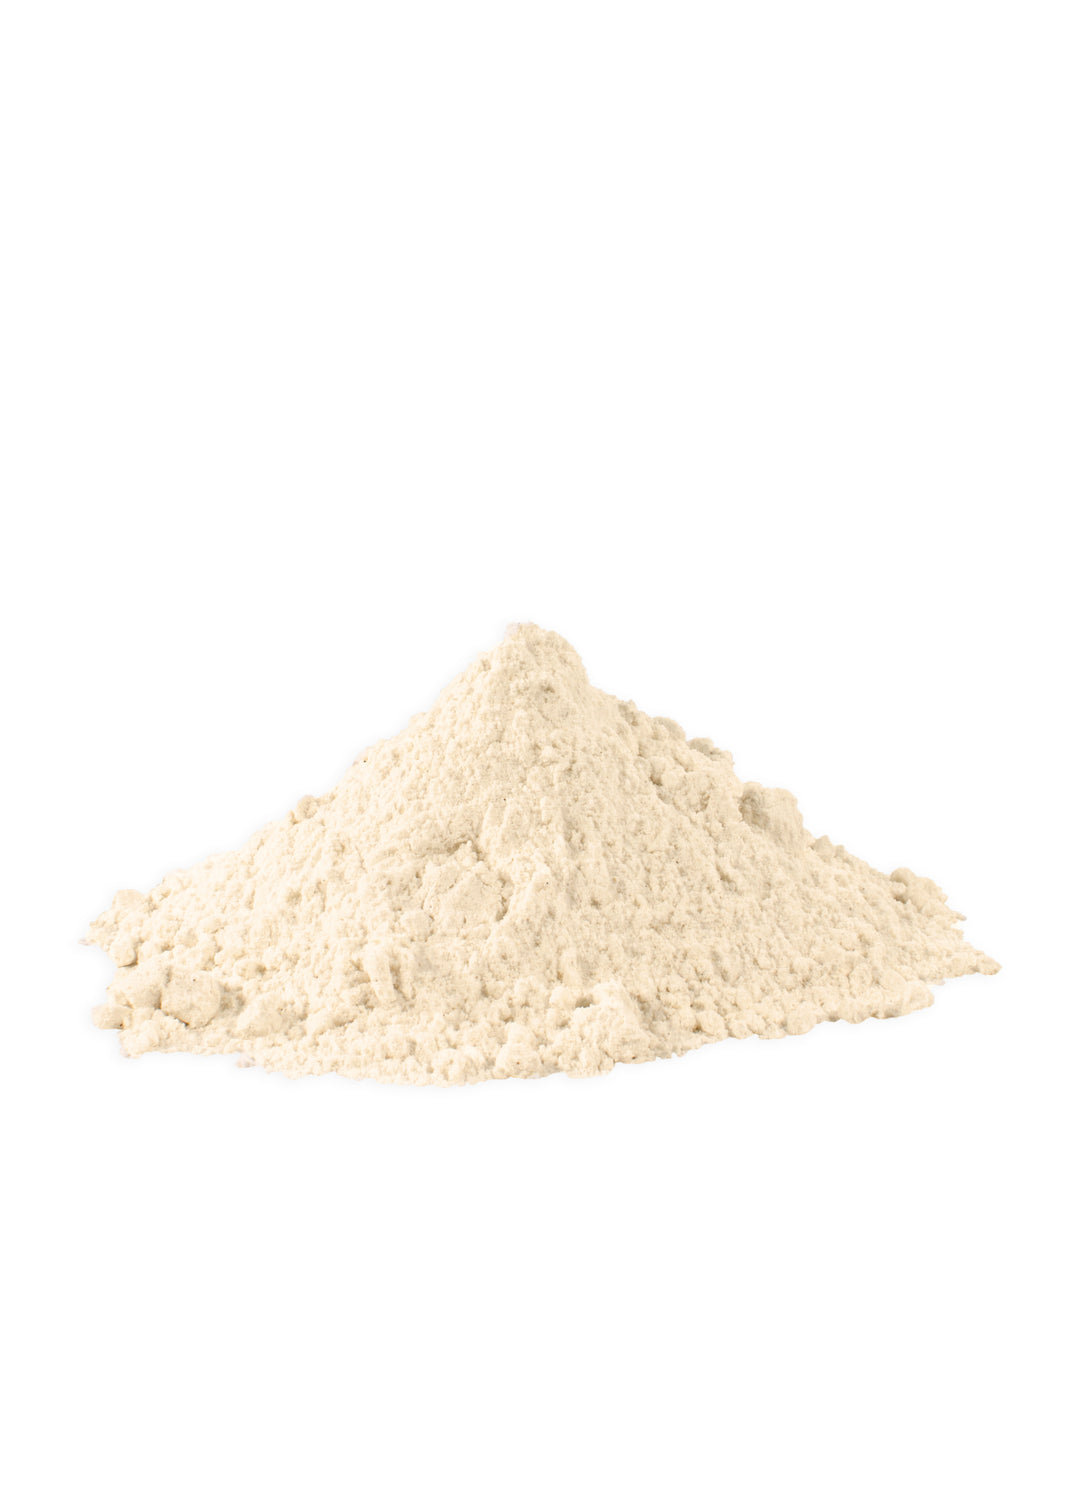 Bob's Red Mill Natural Foods Inc Oat Flour Gluten Free-18 oz.-4/Case